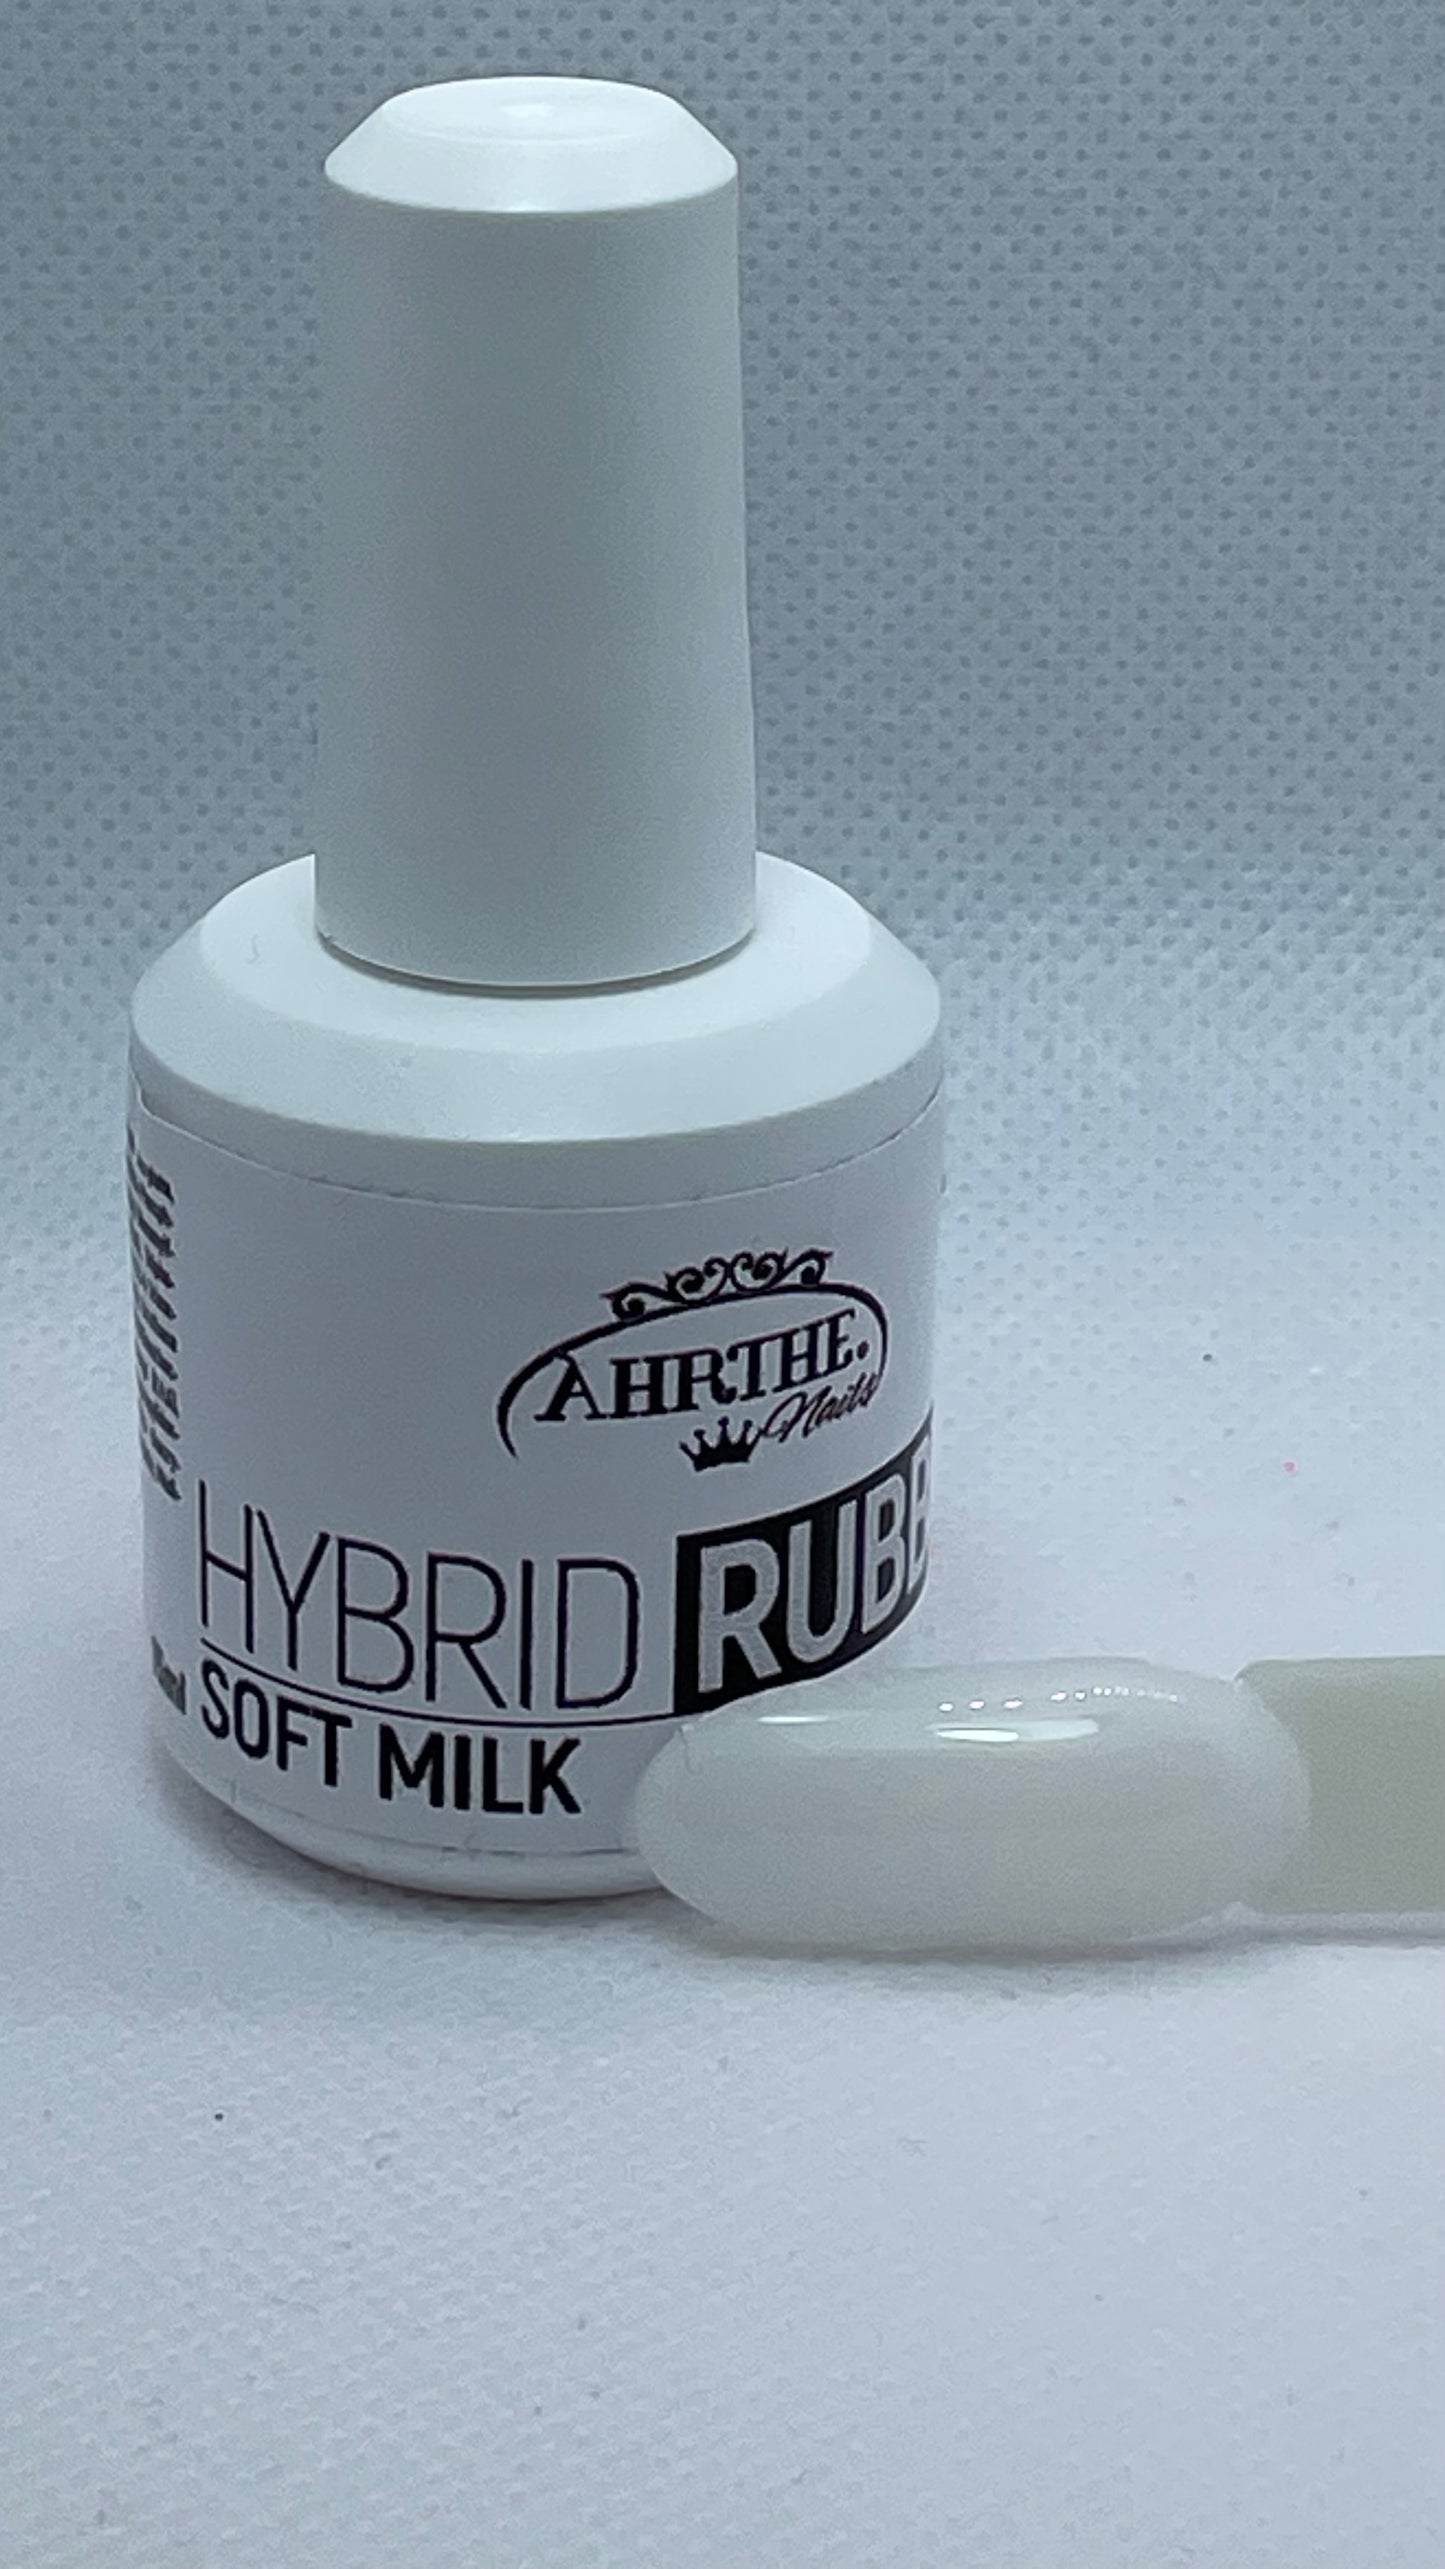 Hybrid Rubber soft Milk 15 ml